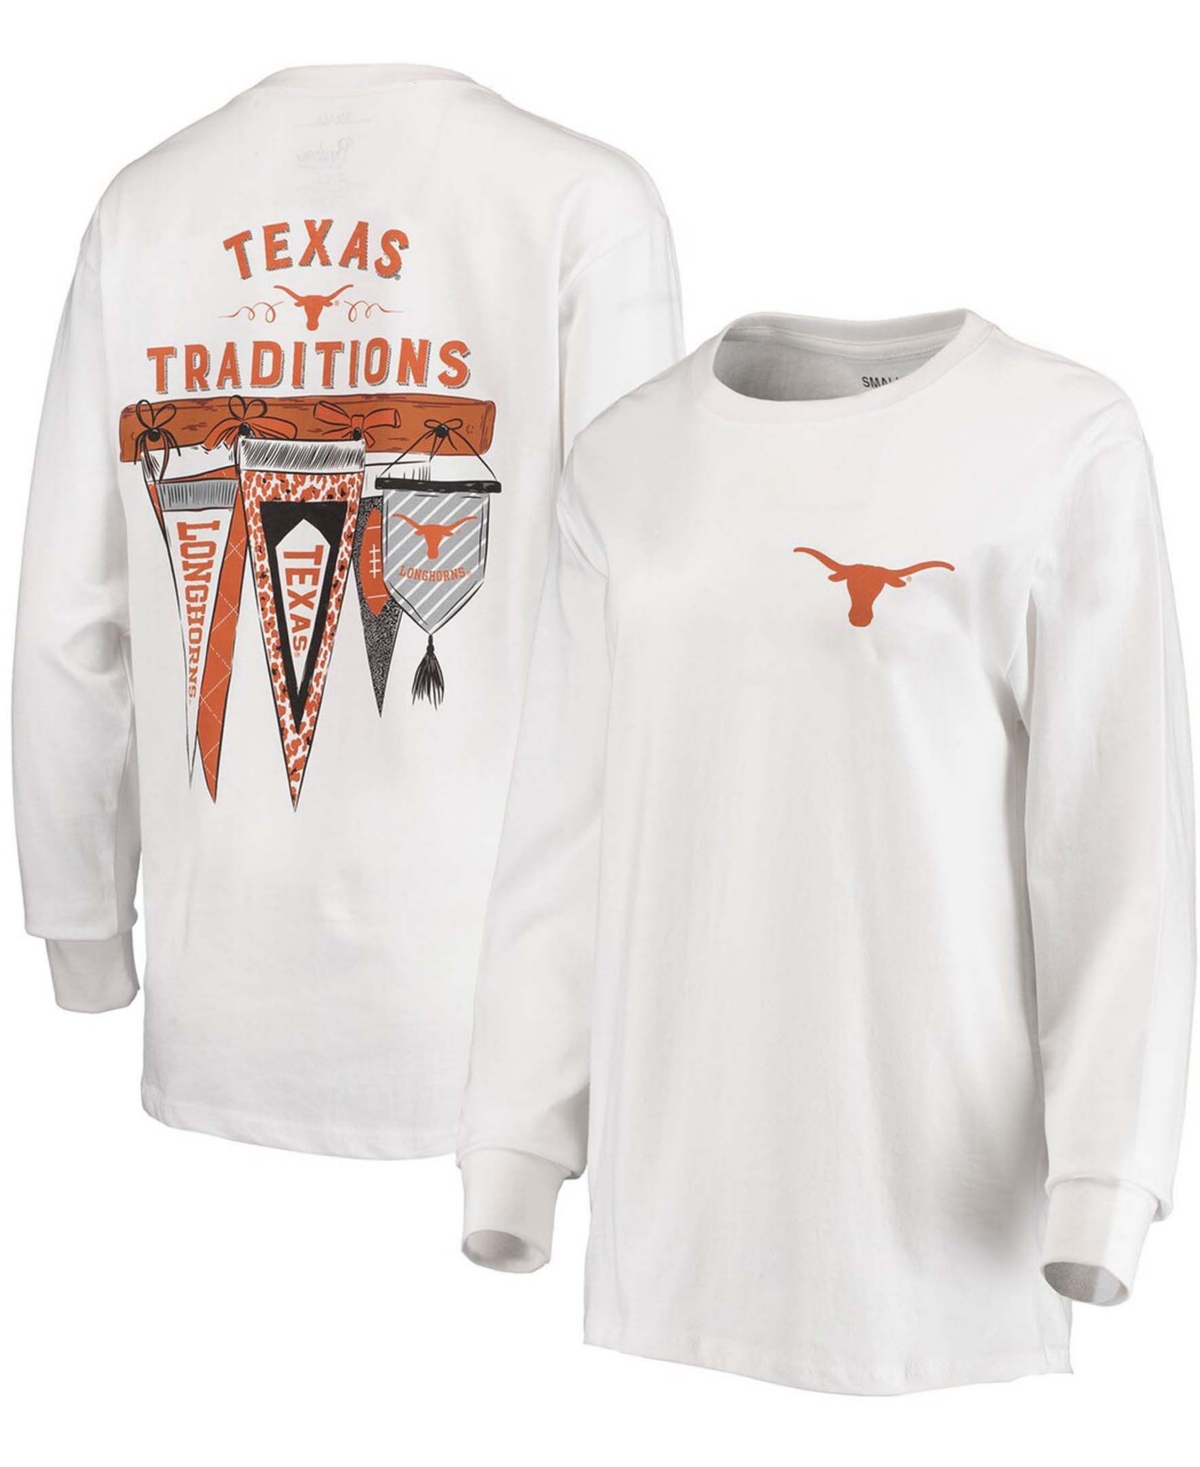 Women's White Texas Longhorns Traditions Pennant Long Sleeve T-shirt - White